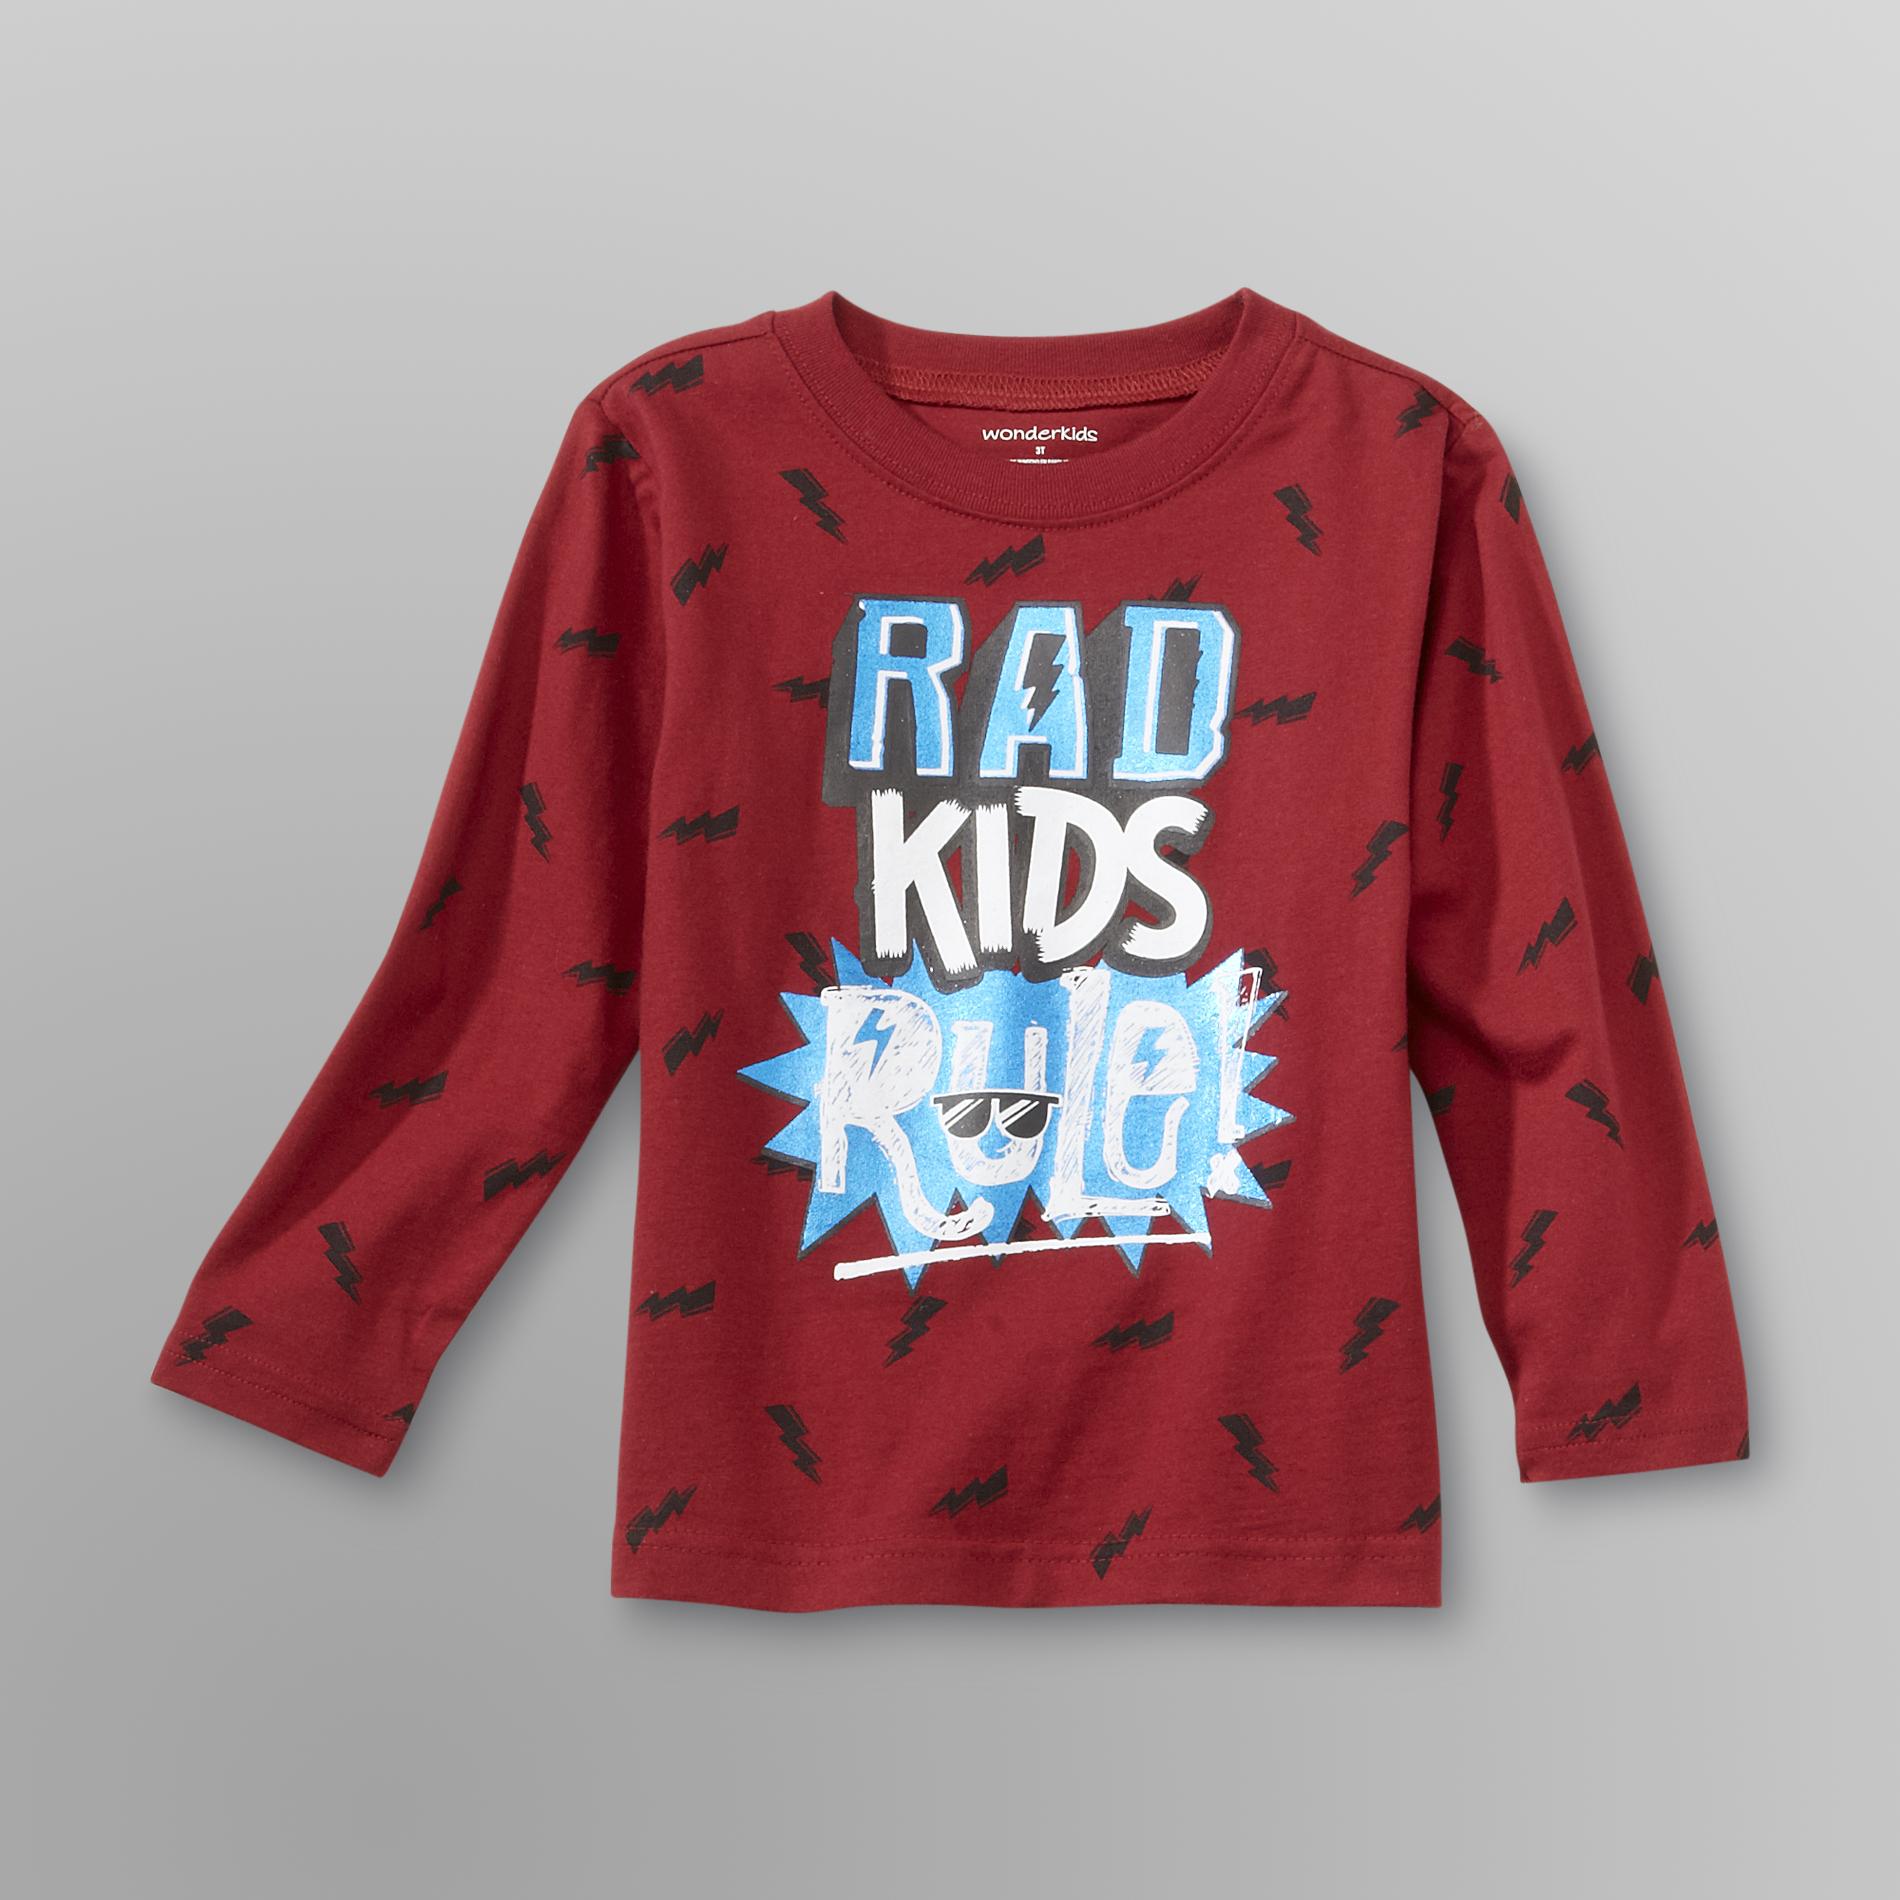 WonderKids Infant & Toddler Boy's Long-Sleeve Graphic T-Shirt - Rad Kids Rule